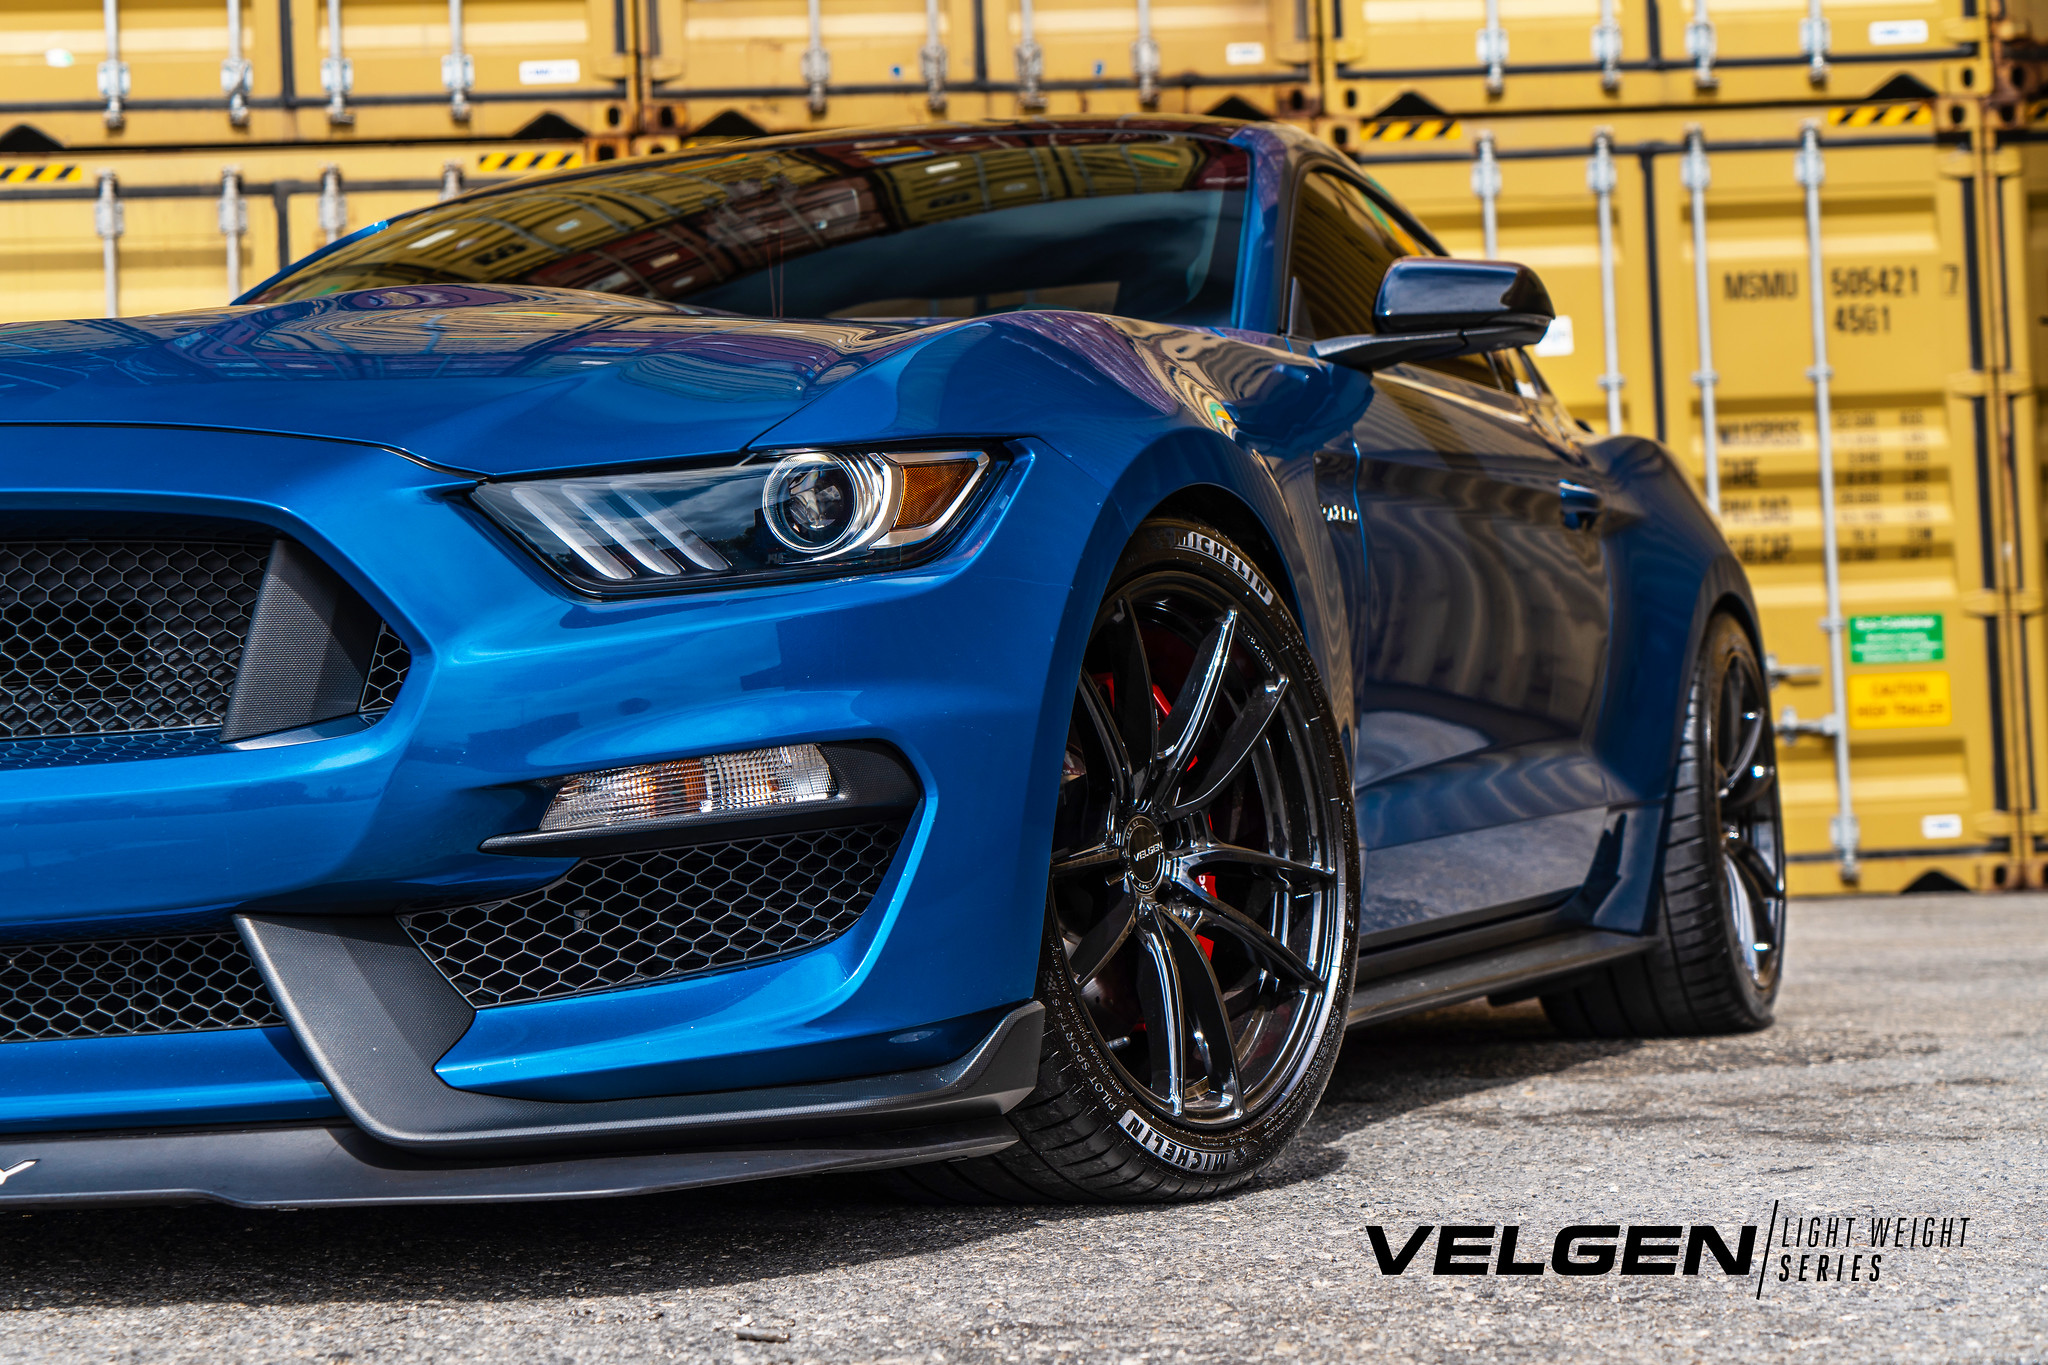 S650 Mustang Velgen wheels for your S650 Mustang | Vibe Motorsports 52695492038_db5dd42b7a_k